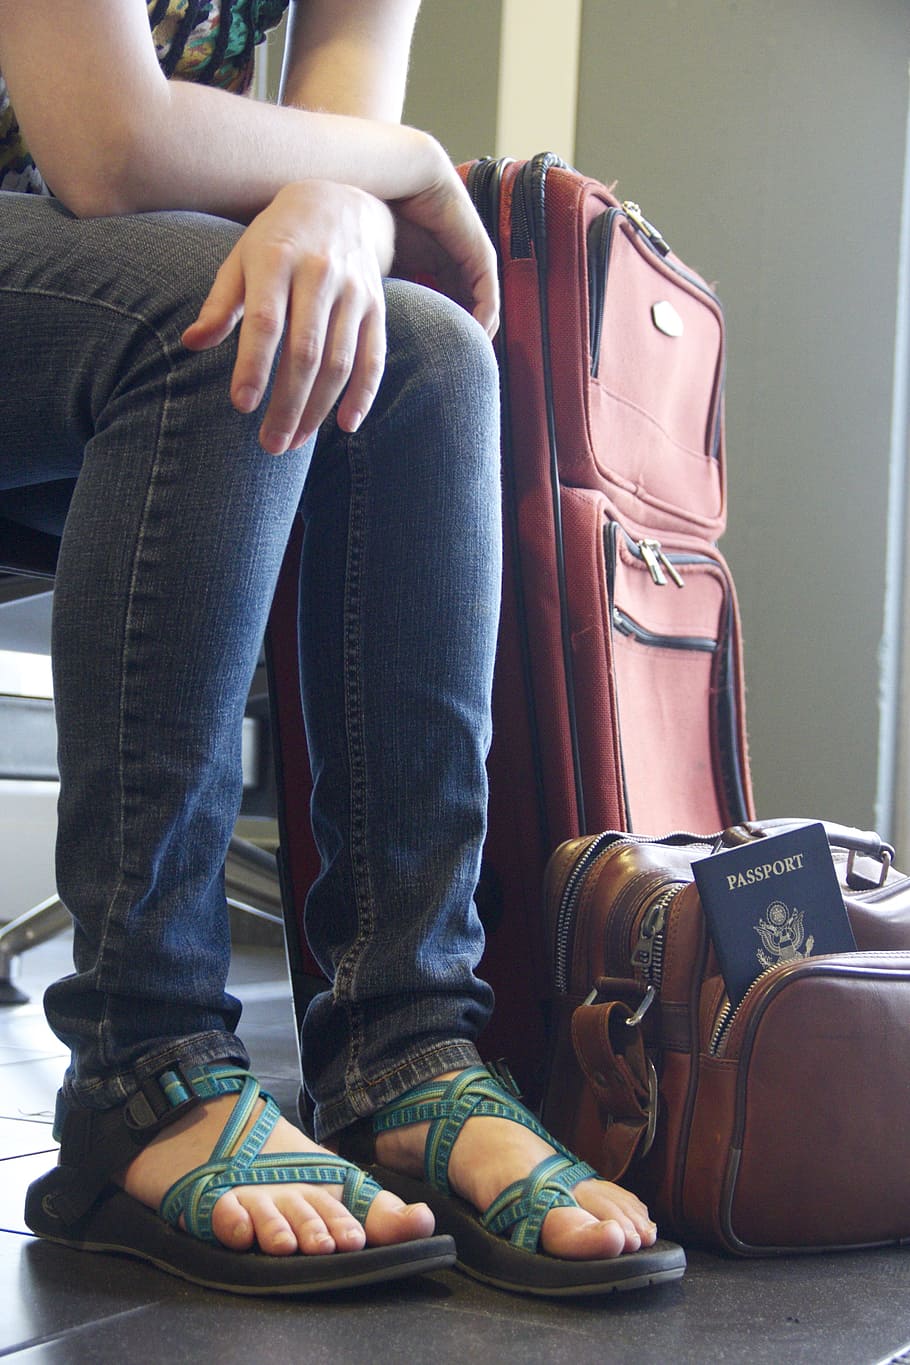 persona, sentado, silla, al lado, equipaje de viaje, viaje, equipaje, aeropuerto, esperando, pasaporte